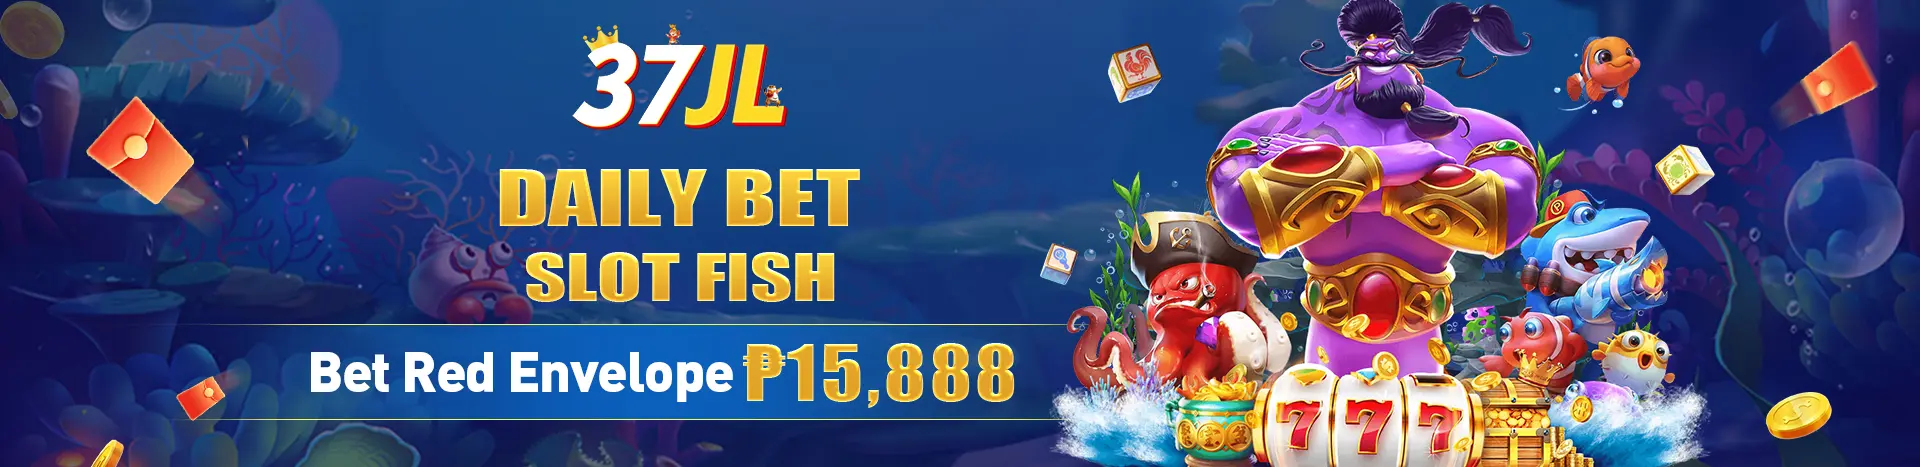 37JL Casino-Daily Bet Bonus